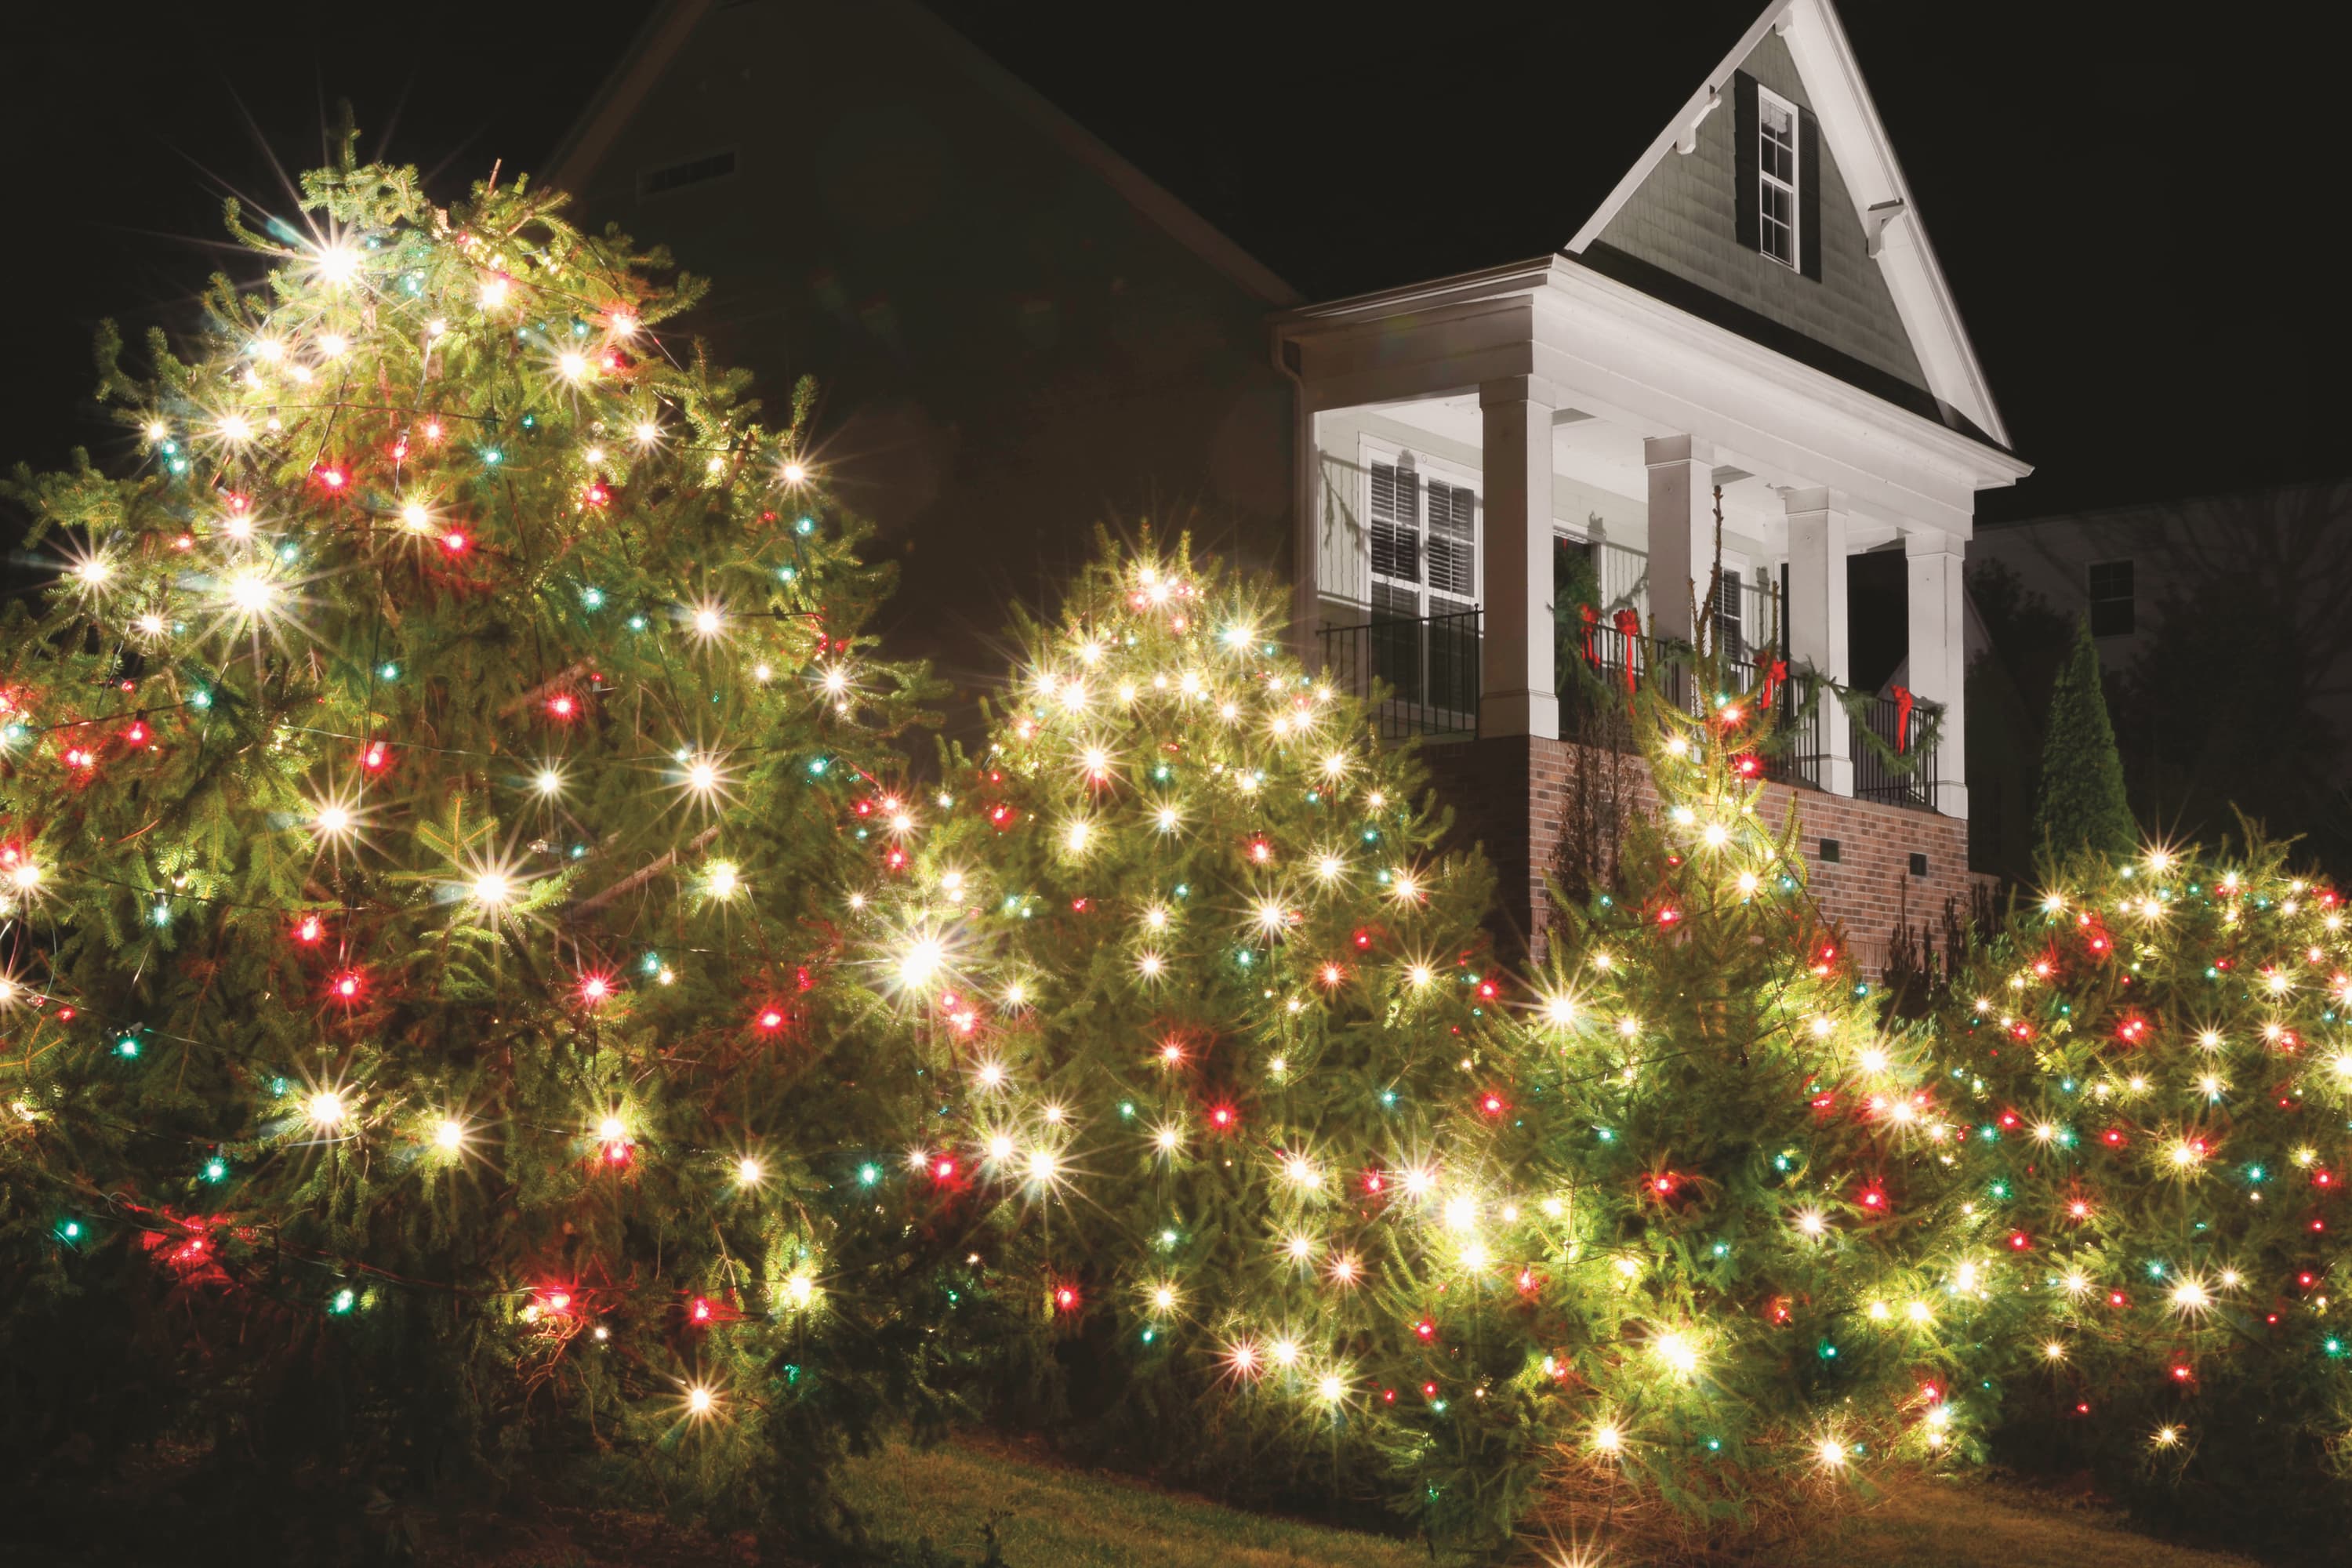 House with exterior Christmas lighting